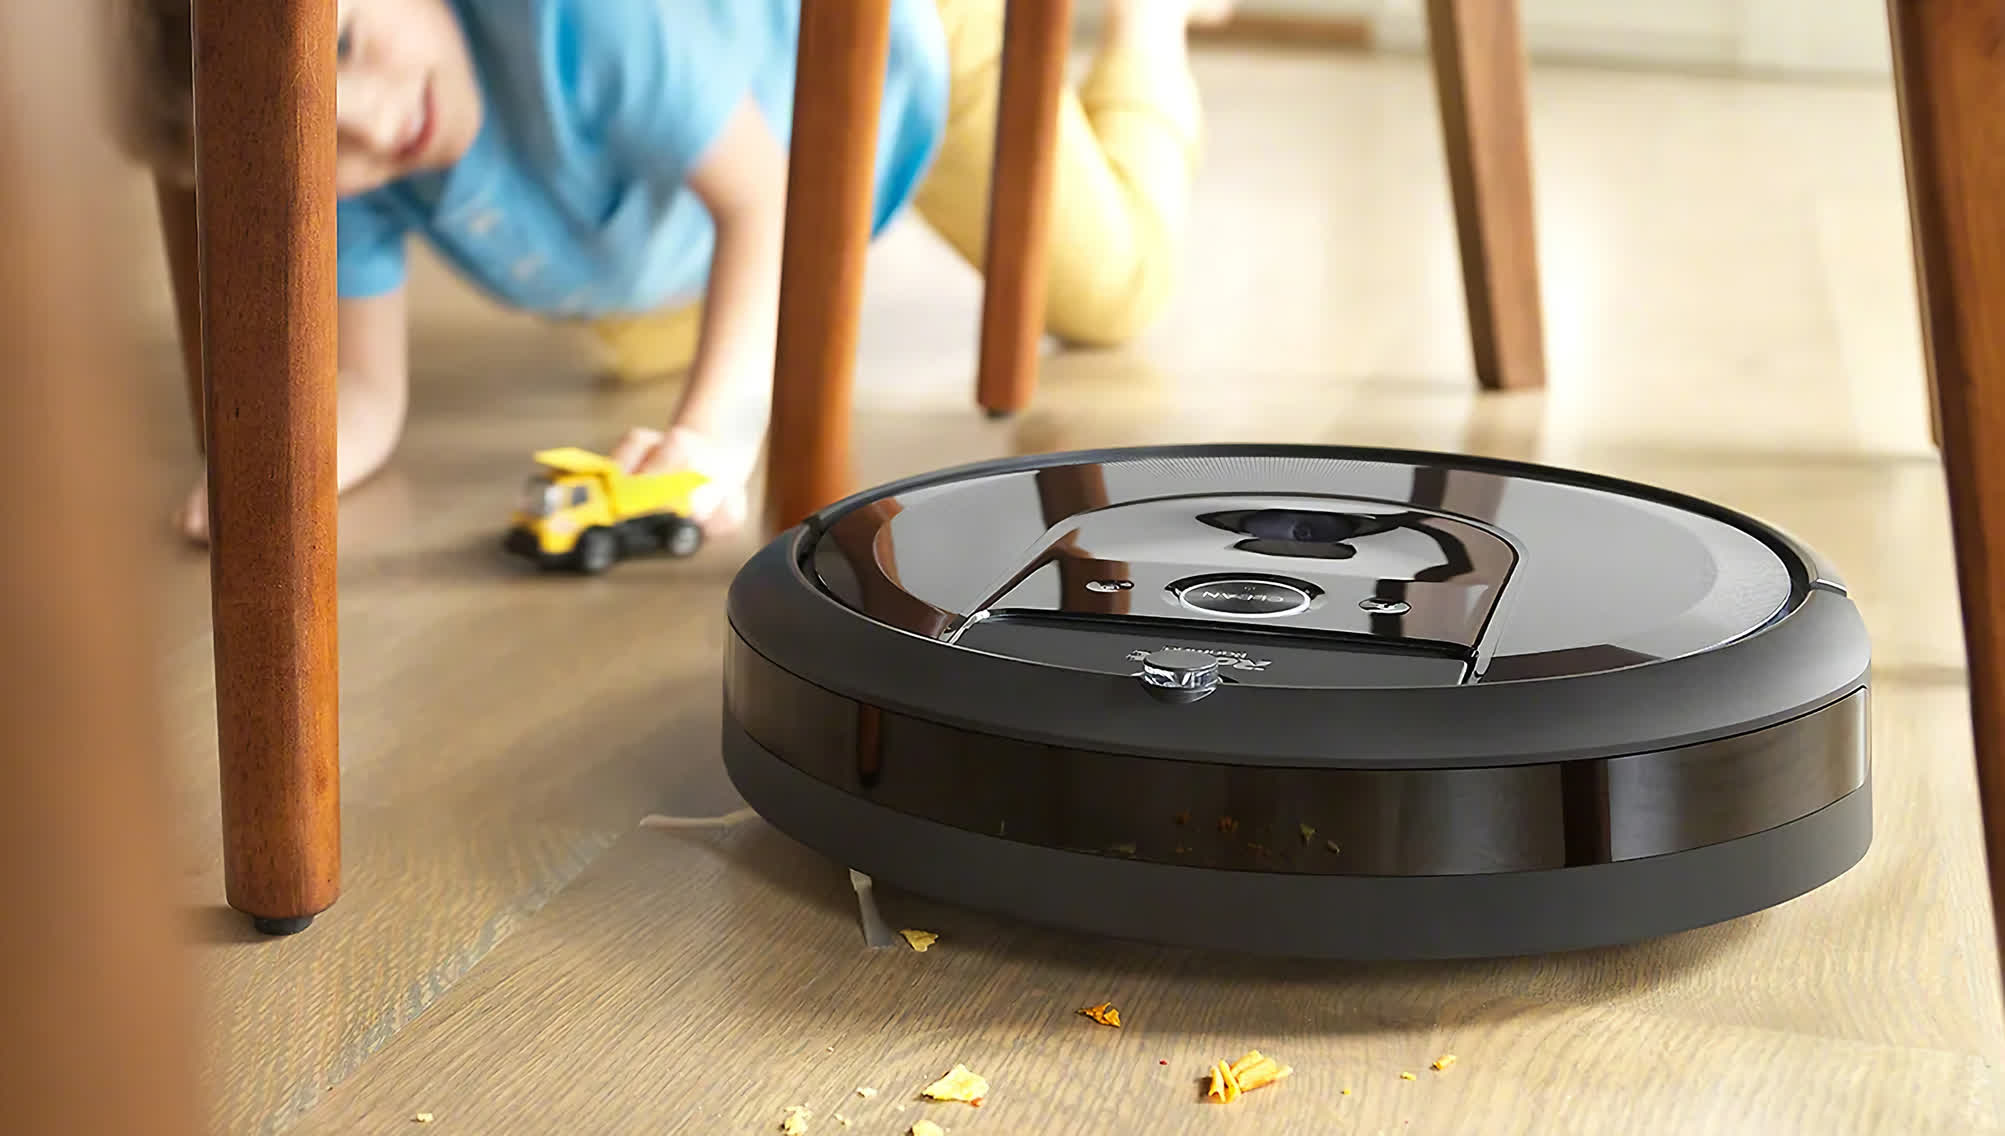 Amazon is buying Roomba maker iRobot for $1.7 billion in cash